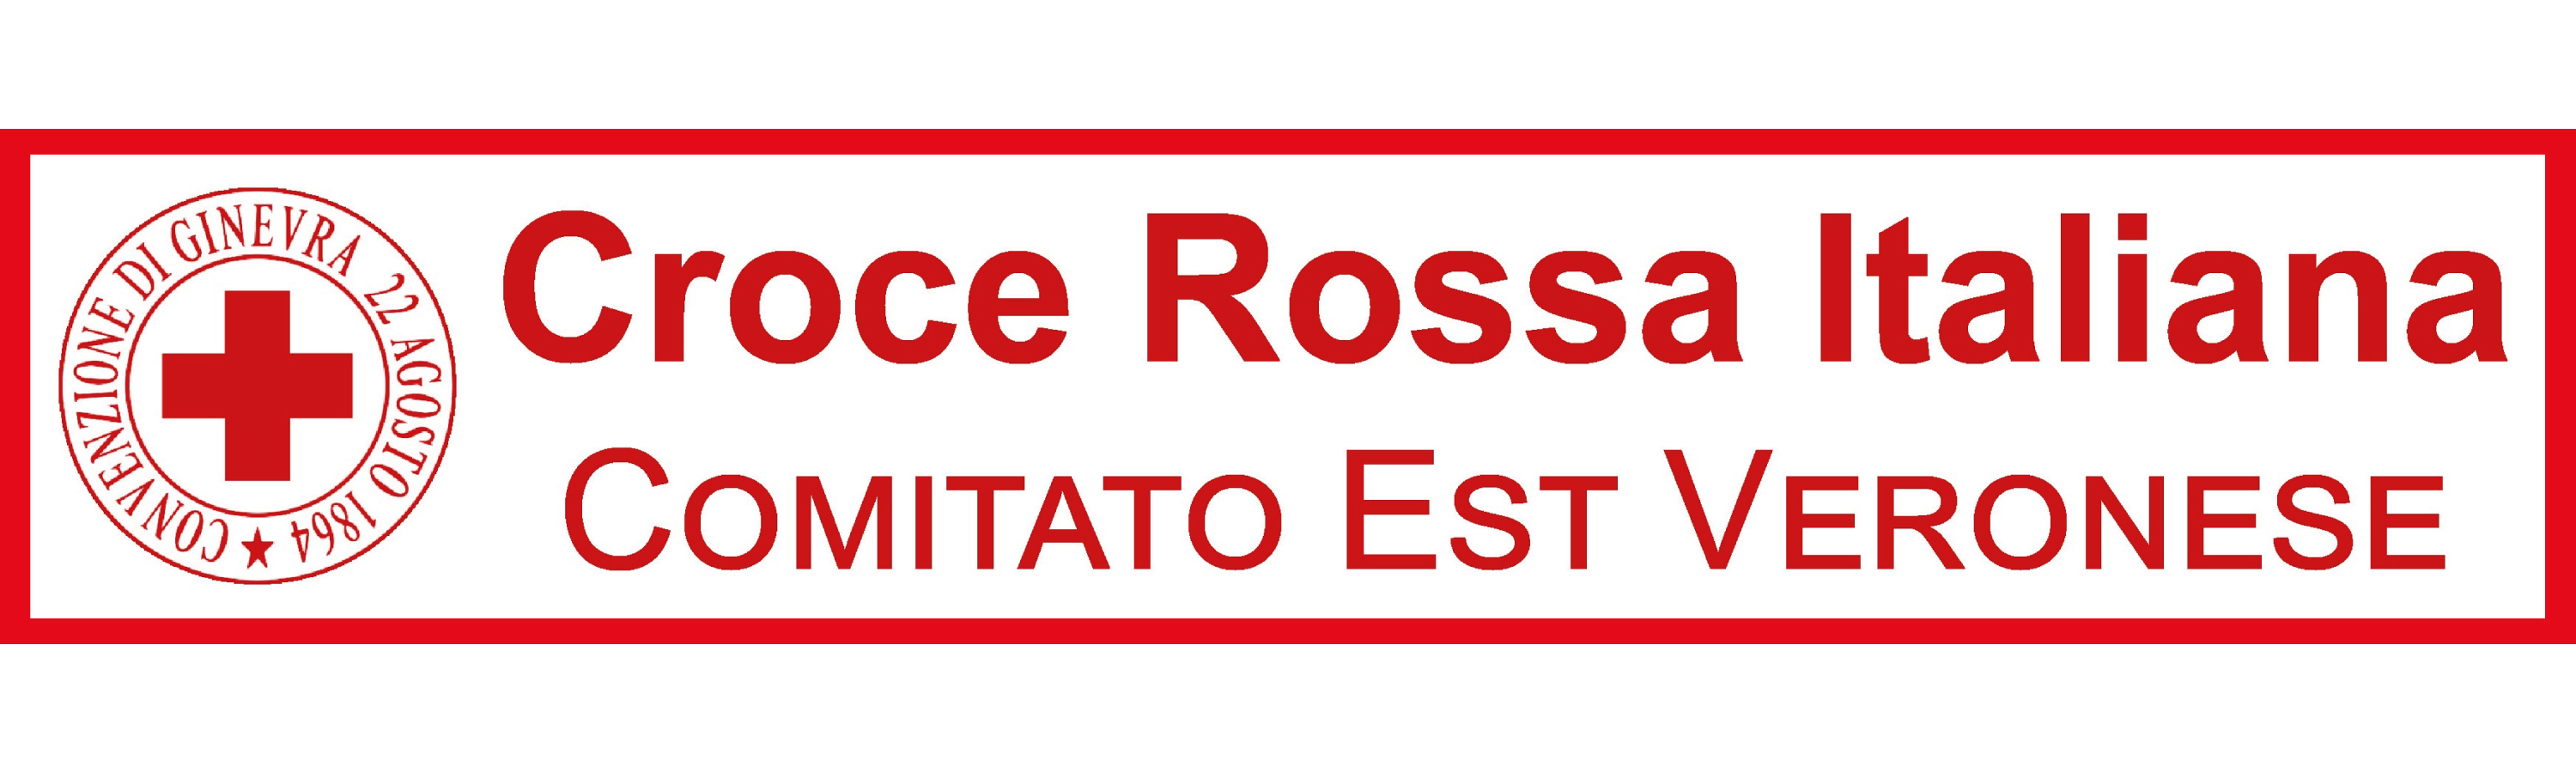 Croce Rossa Italiana Est Veronese